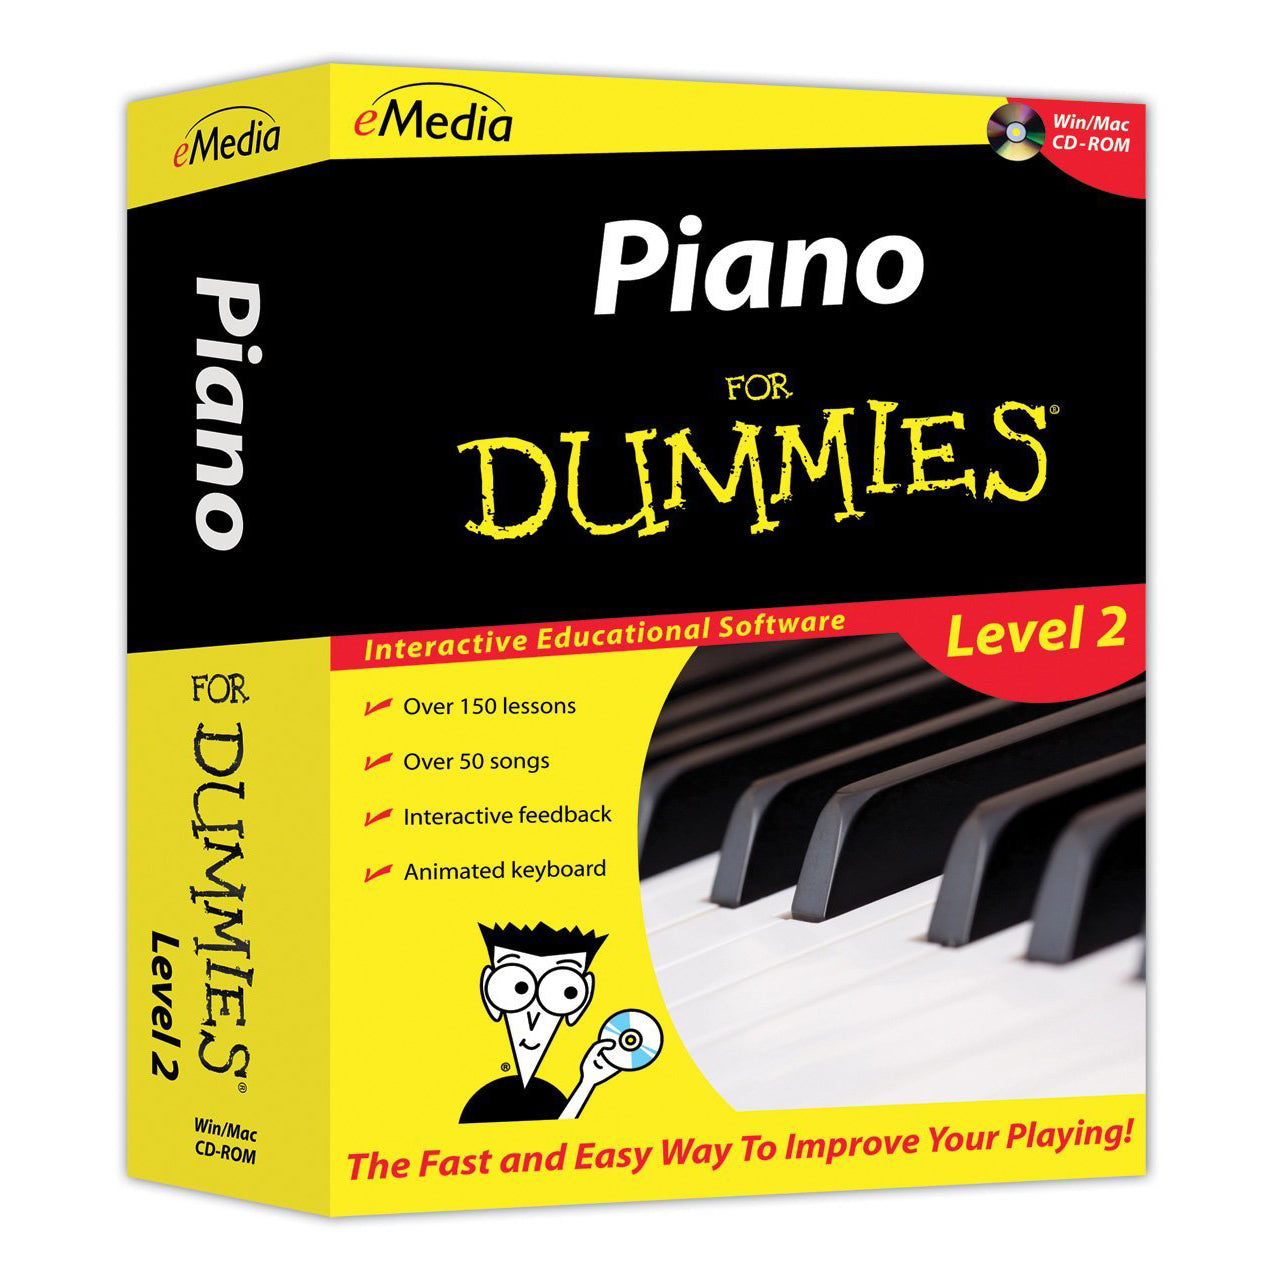 eMedia Piano for Dummies 2 - Macintosh (PIANODUM2)